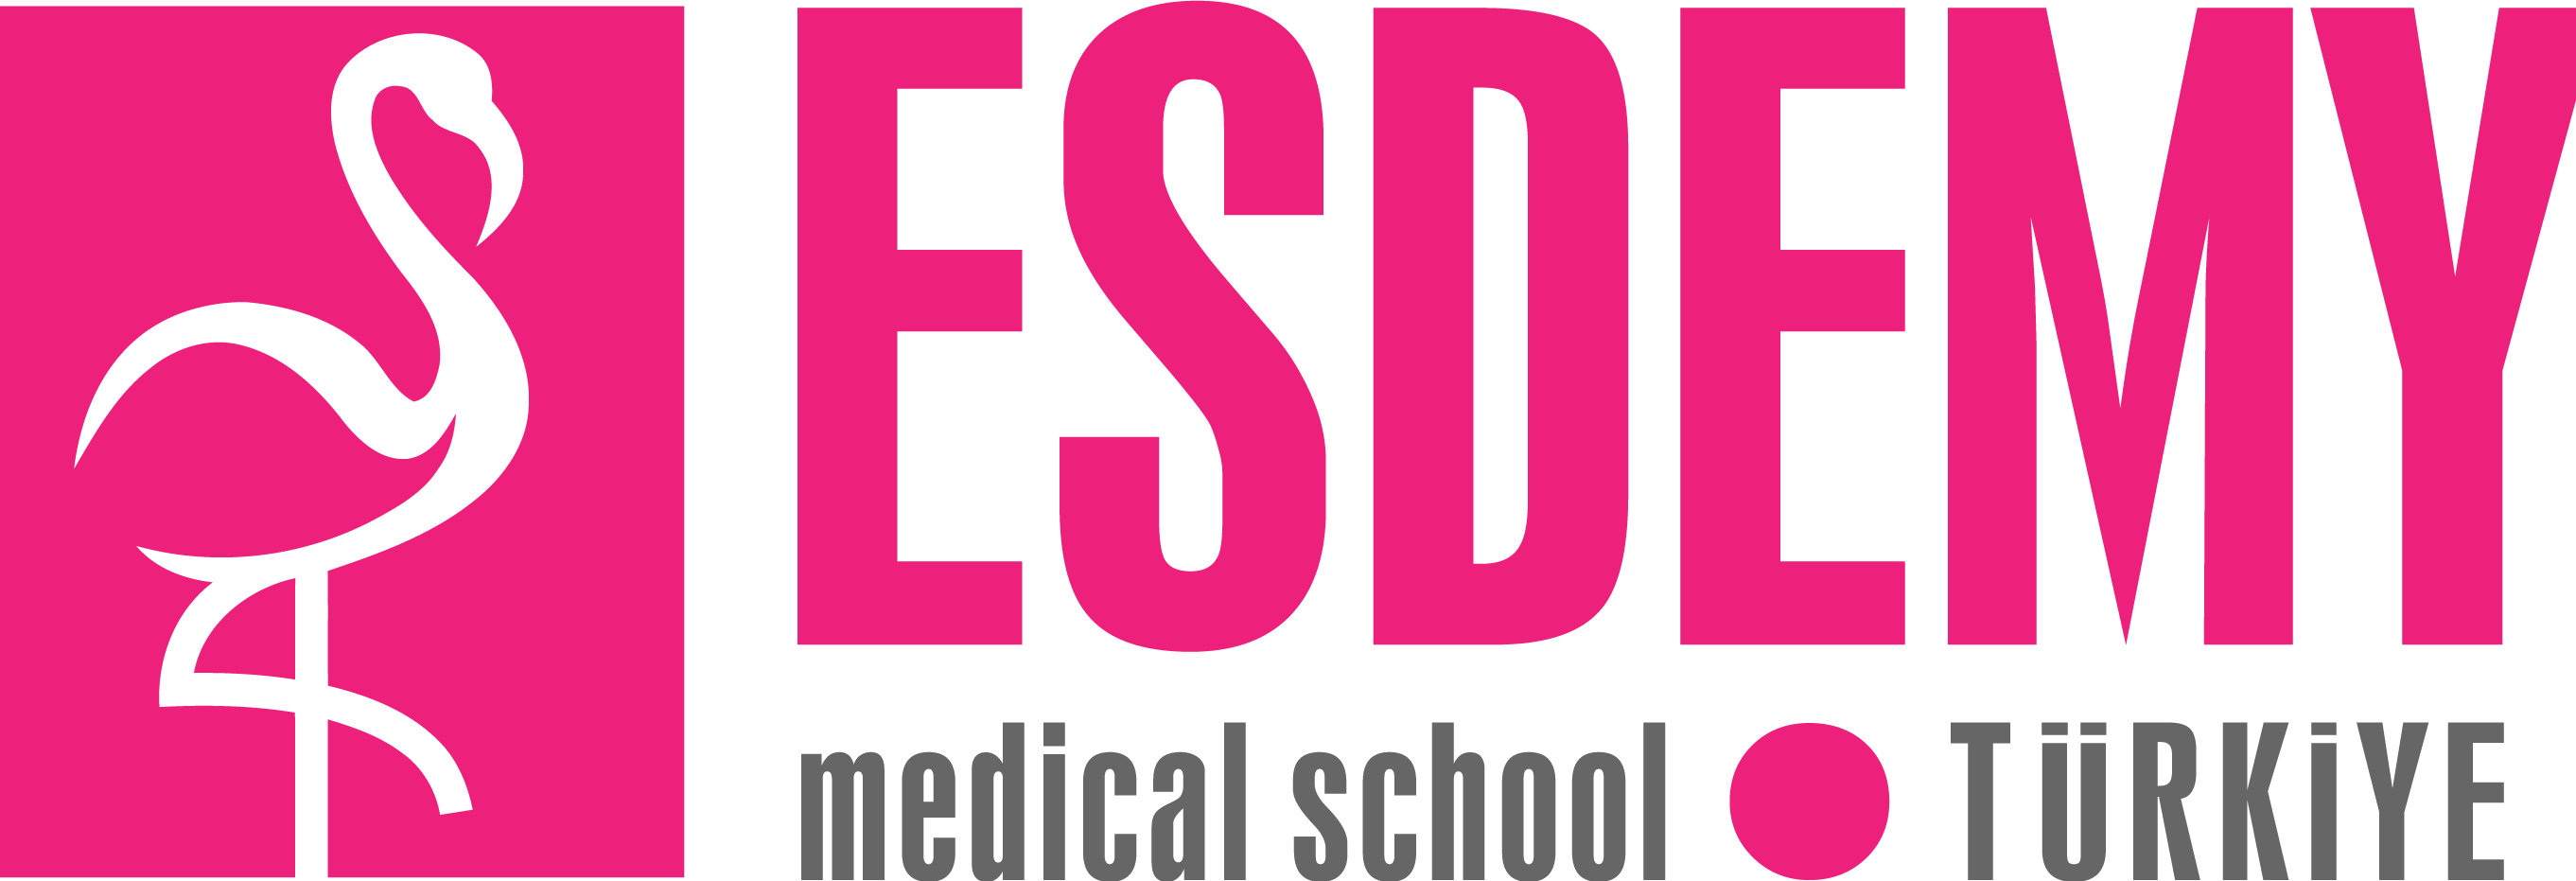 ESDEMY Medical School TÜRKİYE